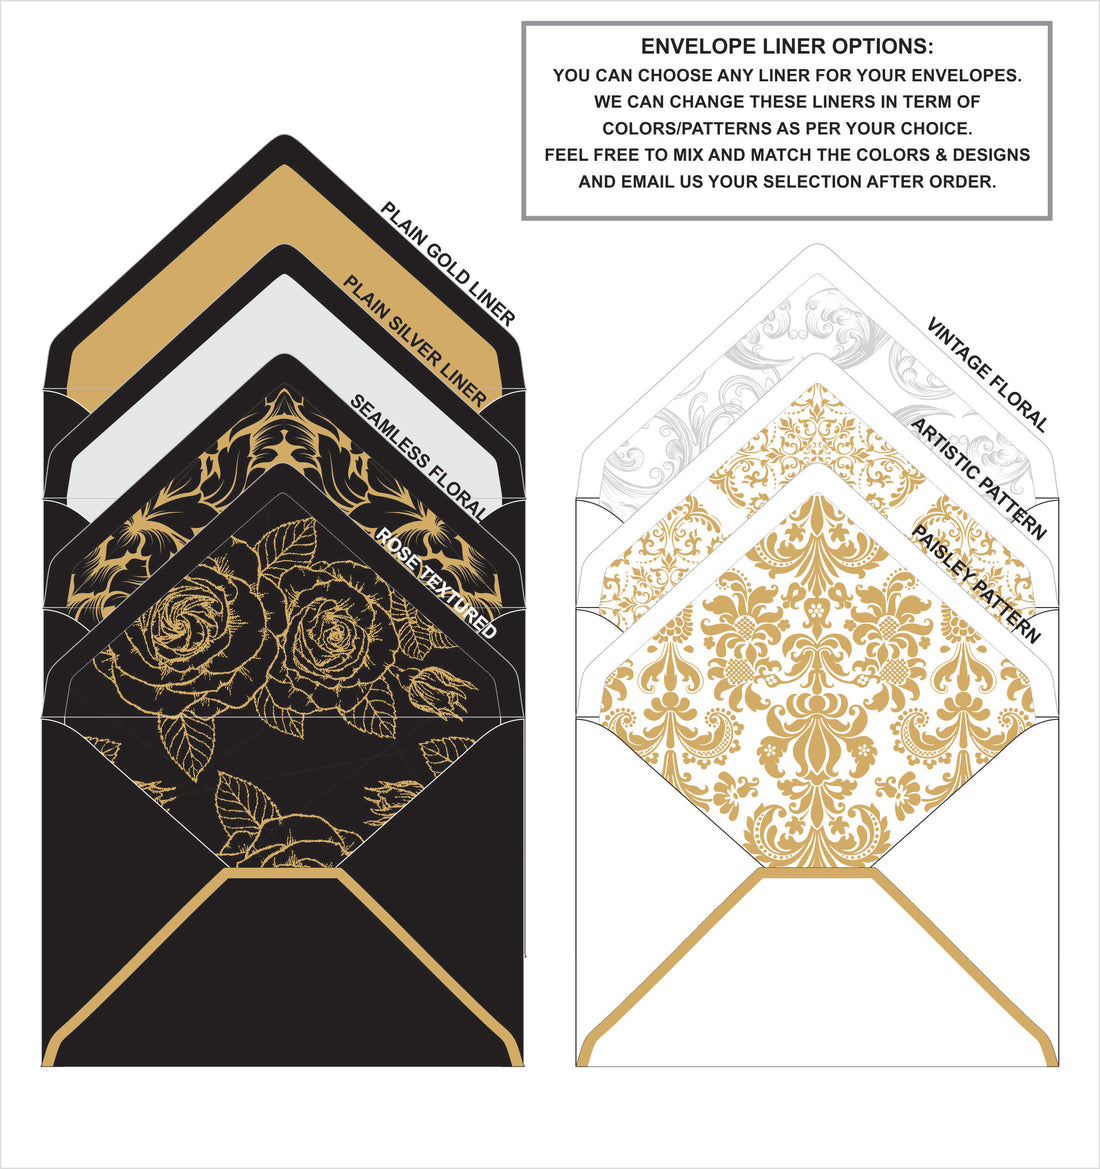 100x Black Frame Wedding Invitation with Gold Border | MyPrintMan